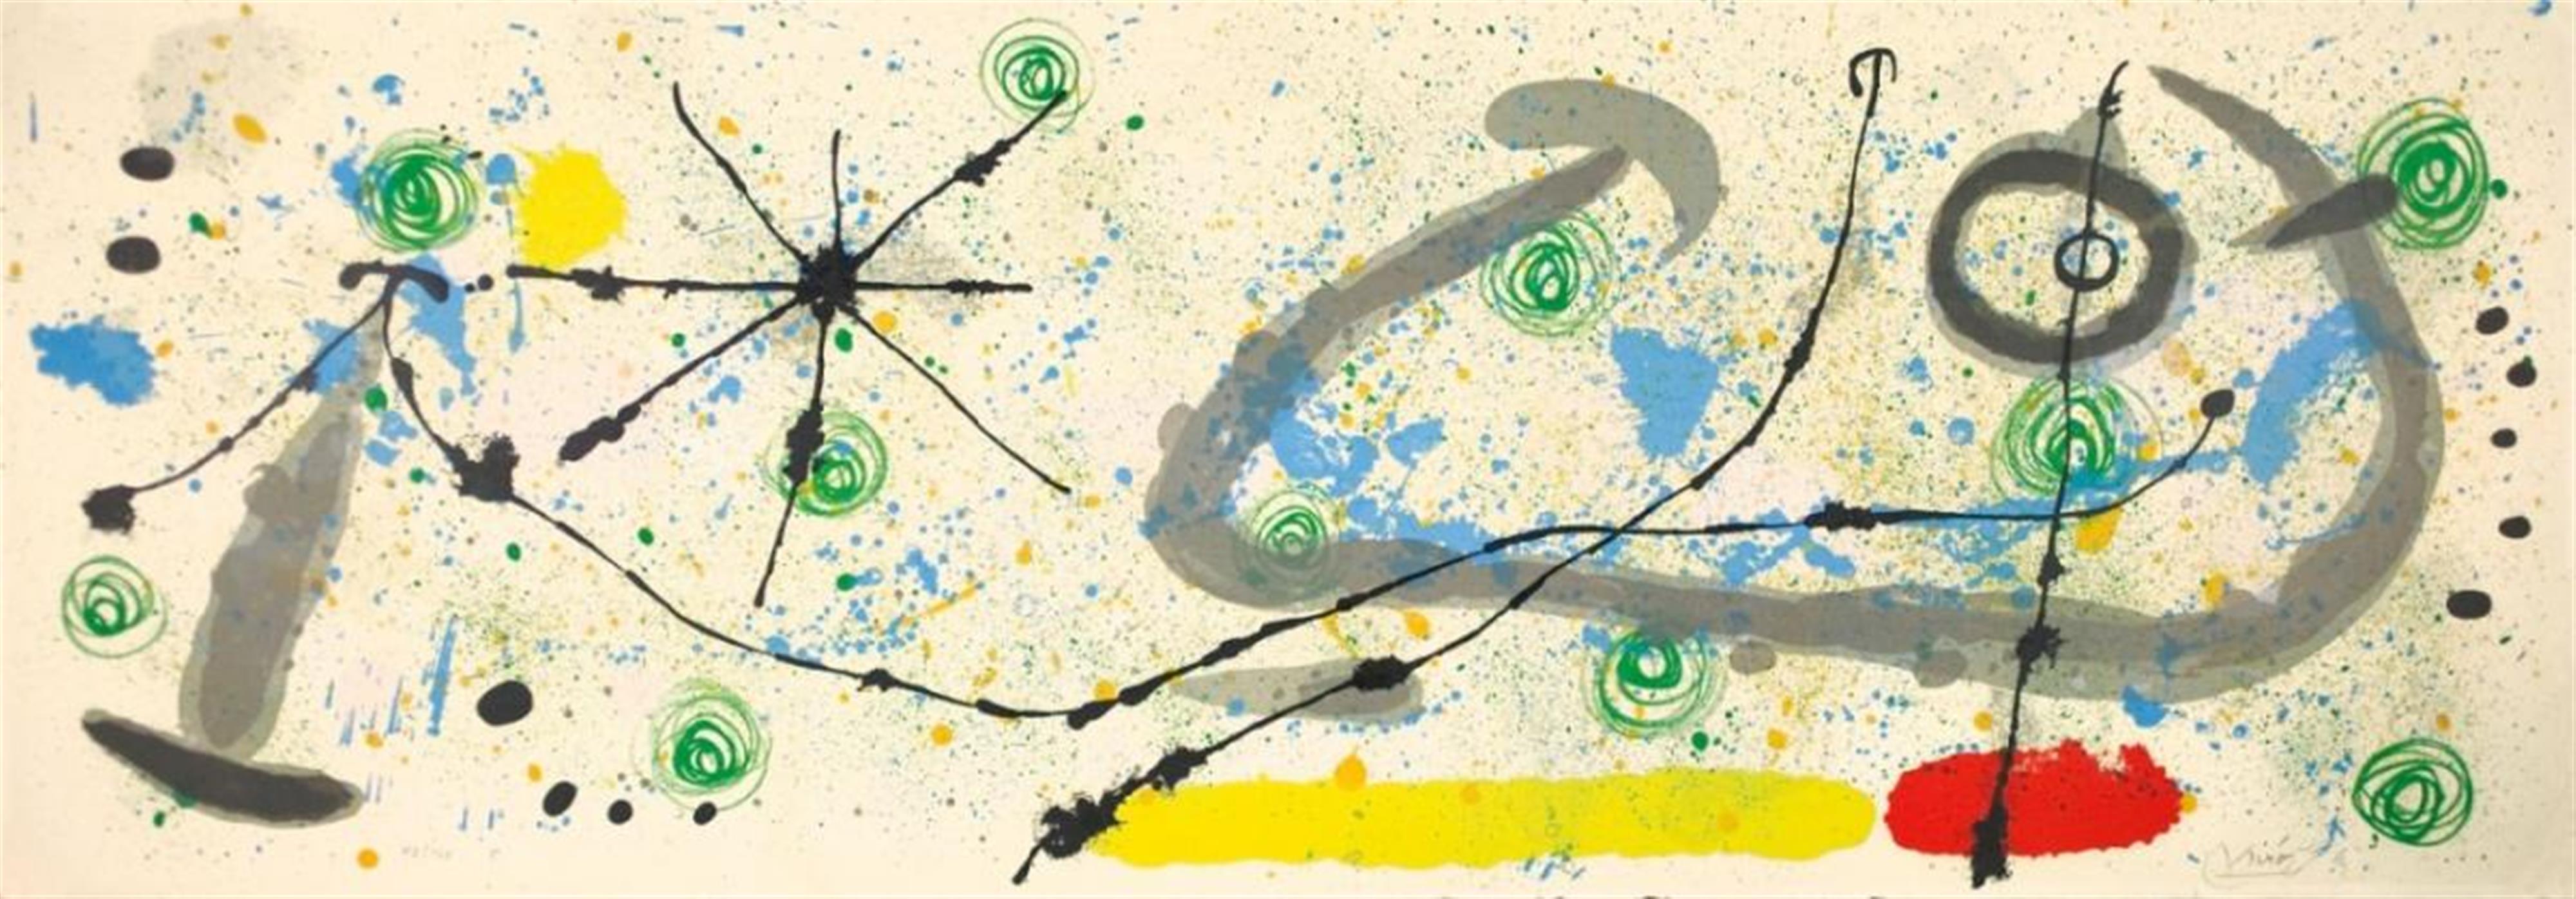 Joan Miró - From: Lézard aux Plumes d'Or - image-1